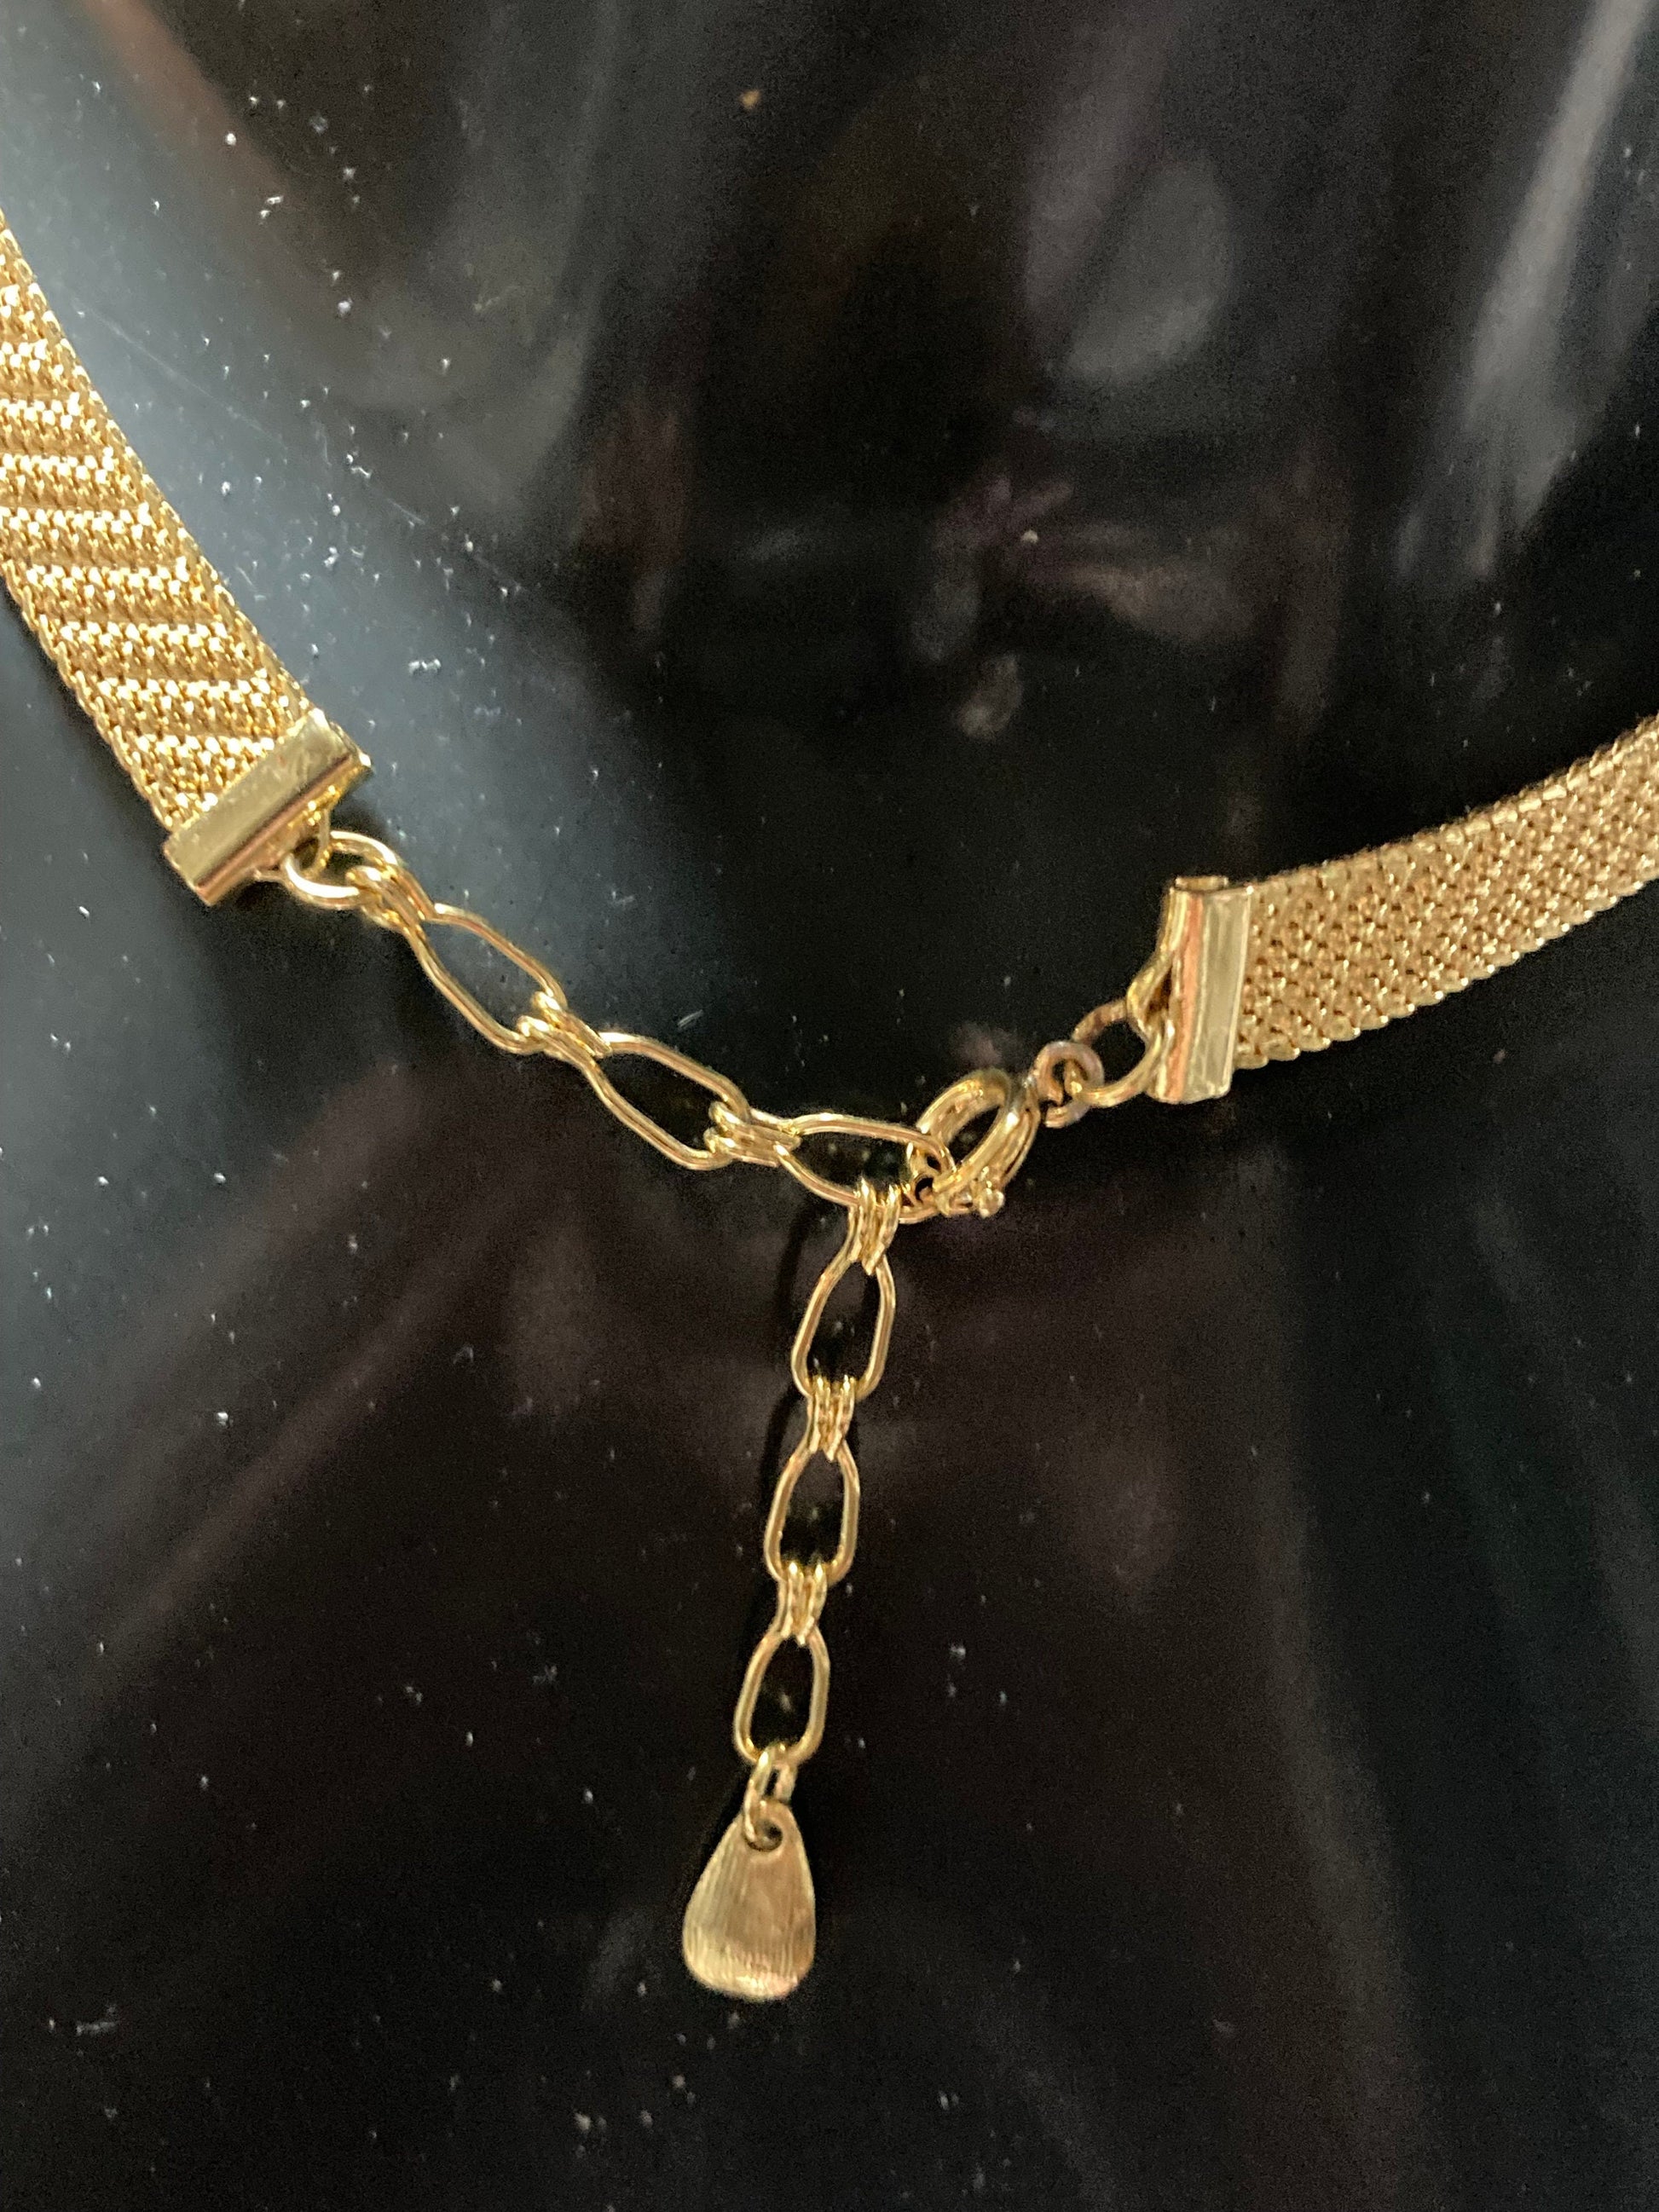 True vintage pristine gold plated mesh choker collar necklace adj length genuine old shop stock